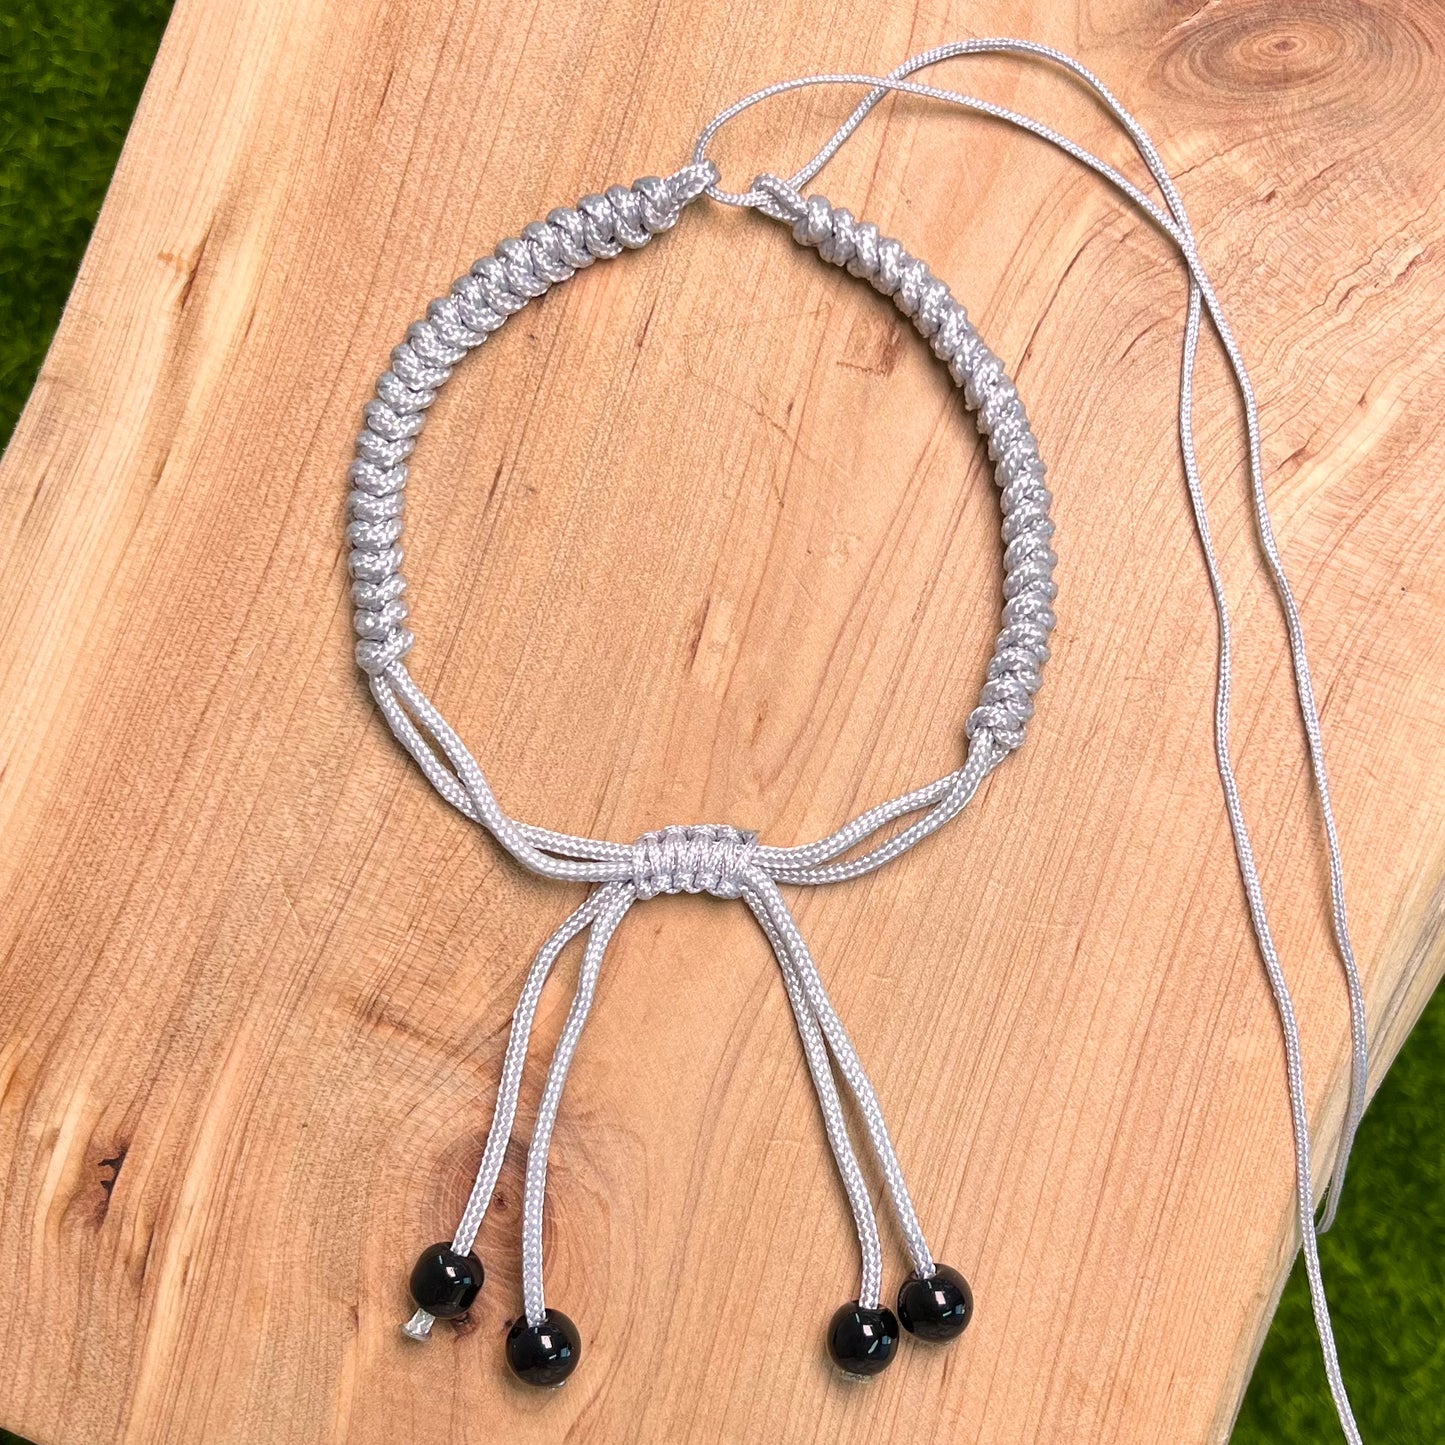 DIY Handmade adjustable bracelet accessories